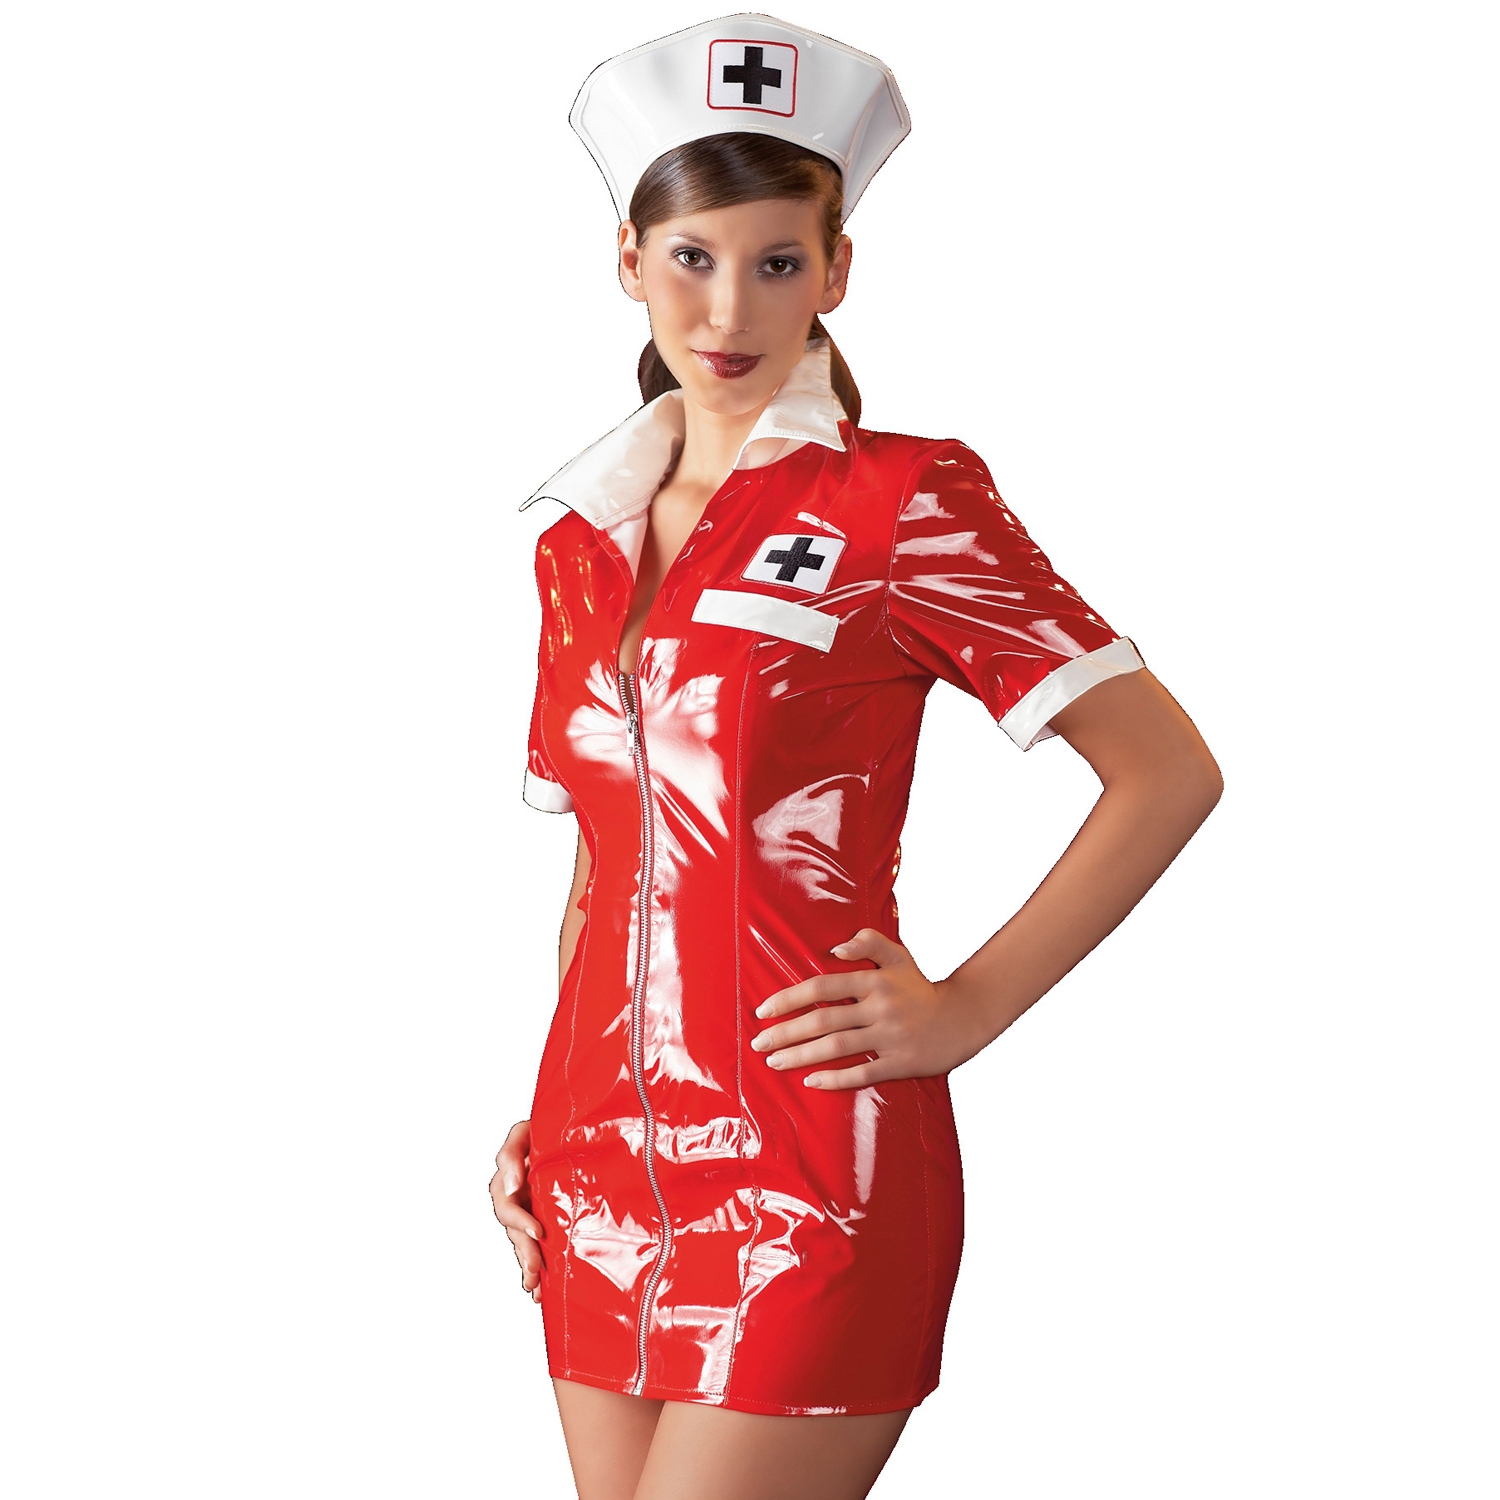 Black Level Sygeplejerske Kostume i Lak - Rød - XL thumbnail